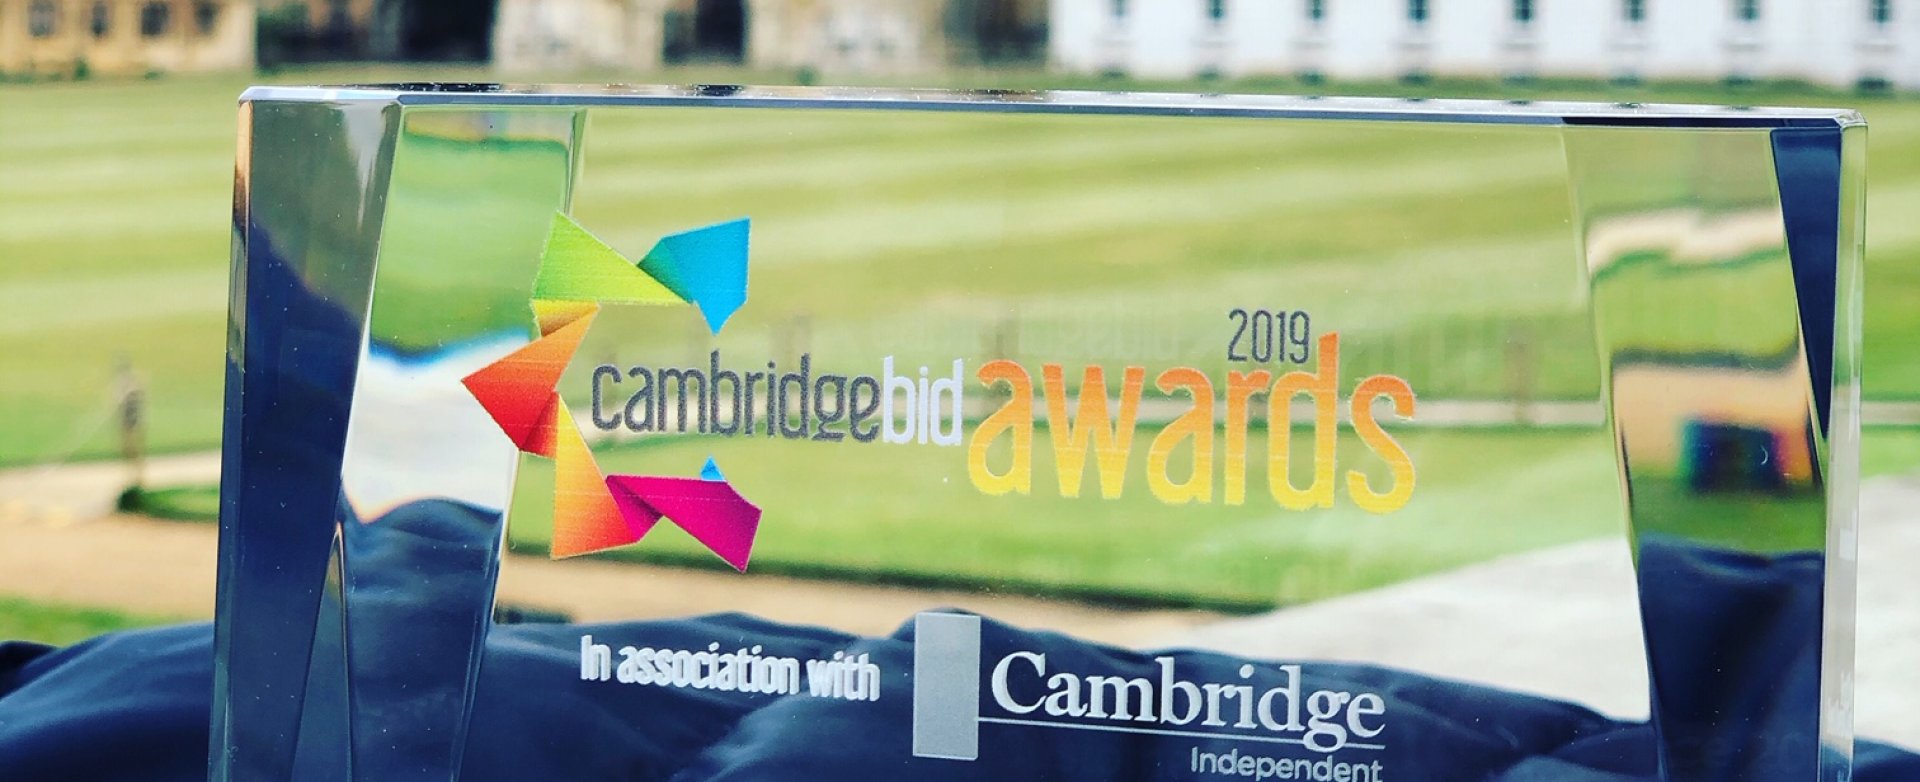 cambridge_bid_award